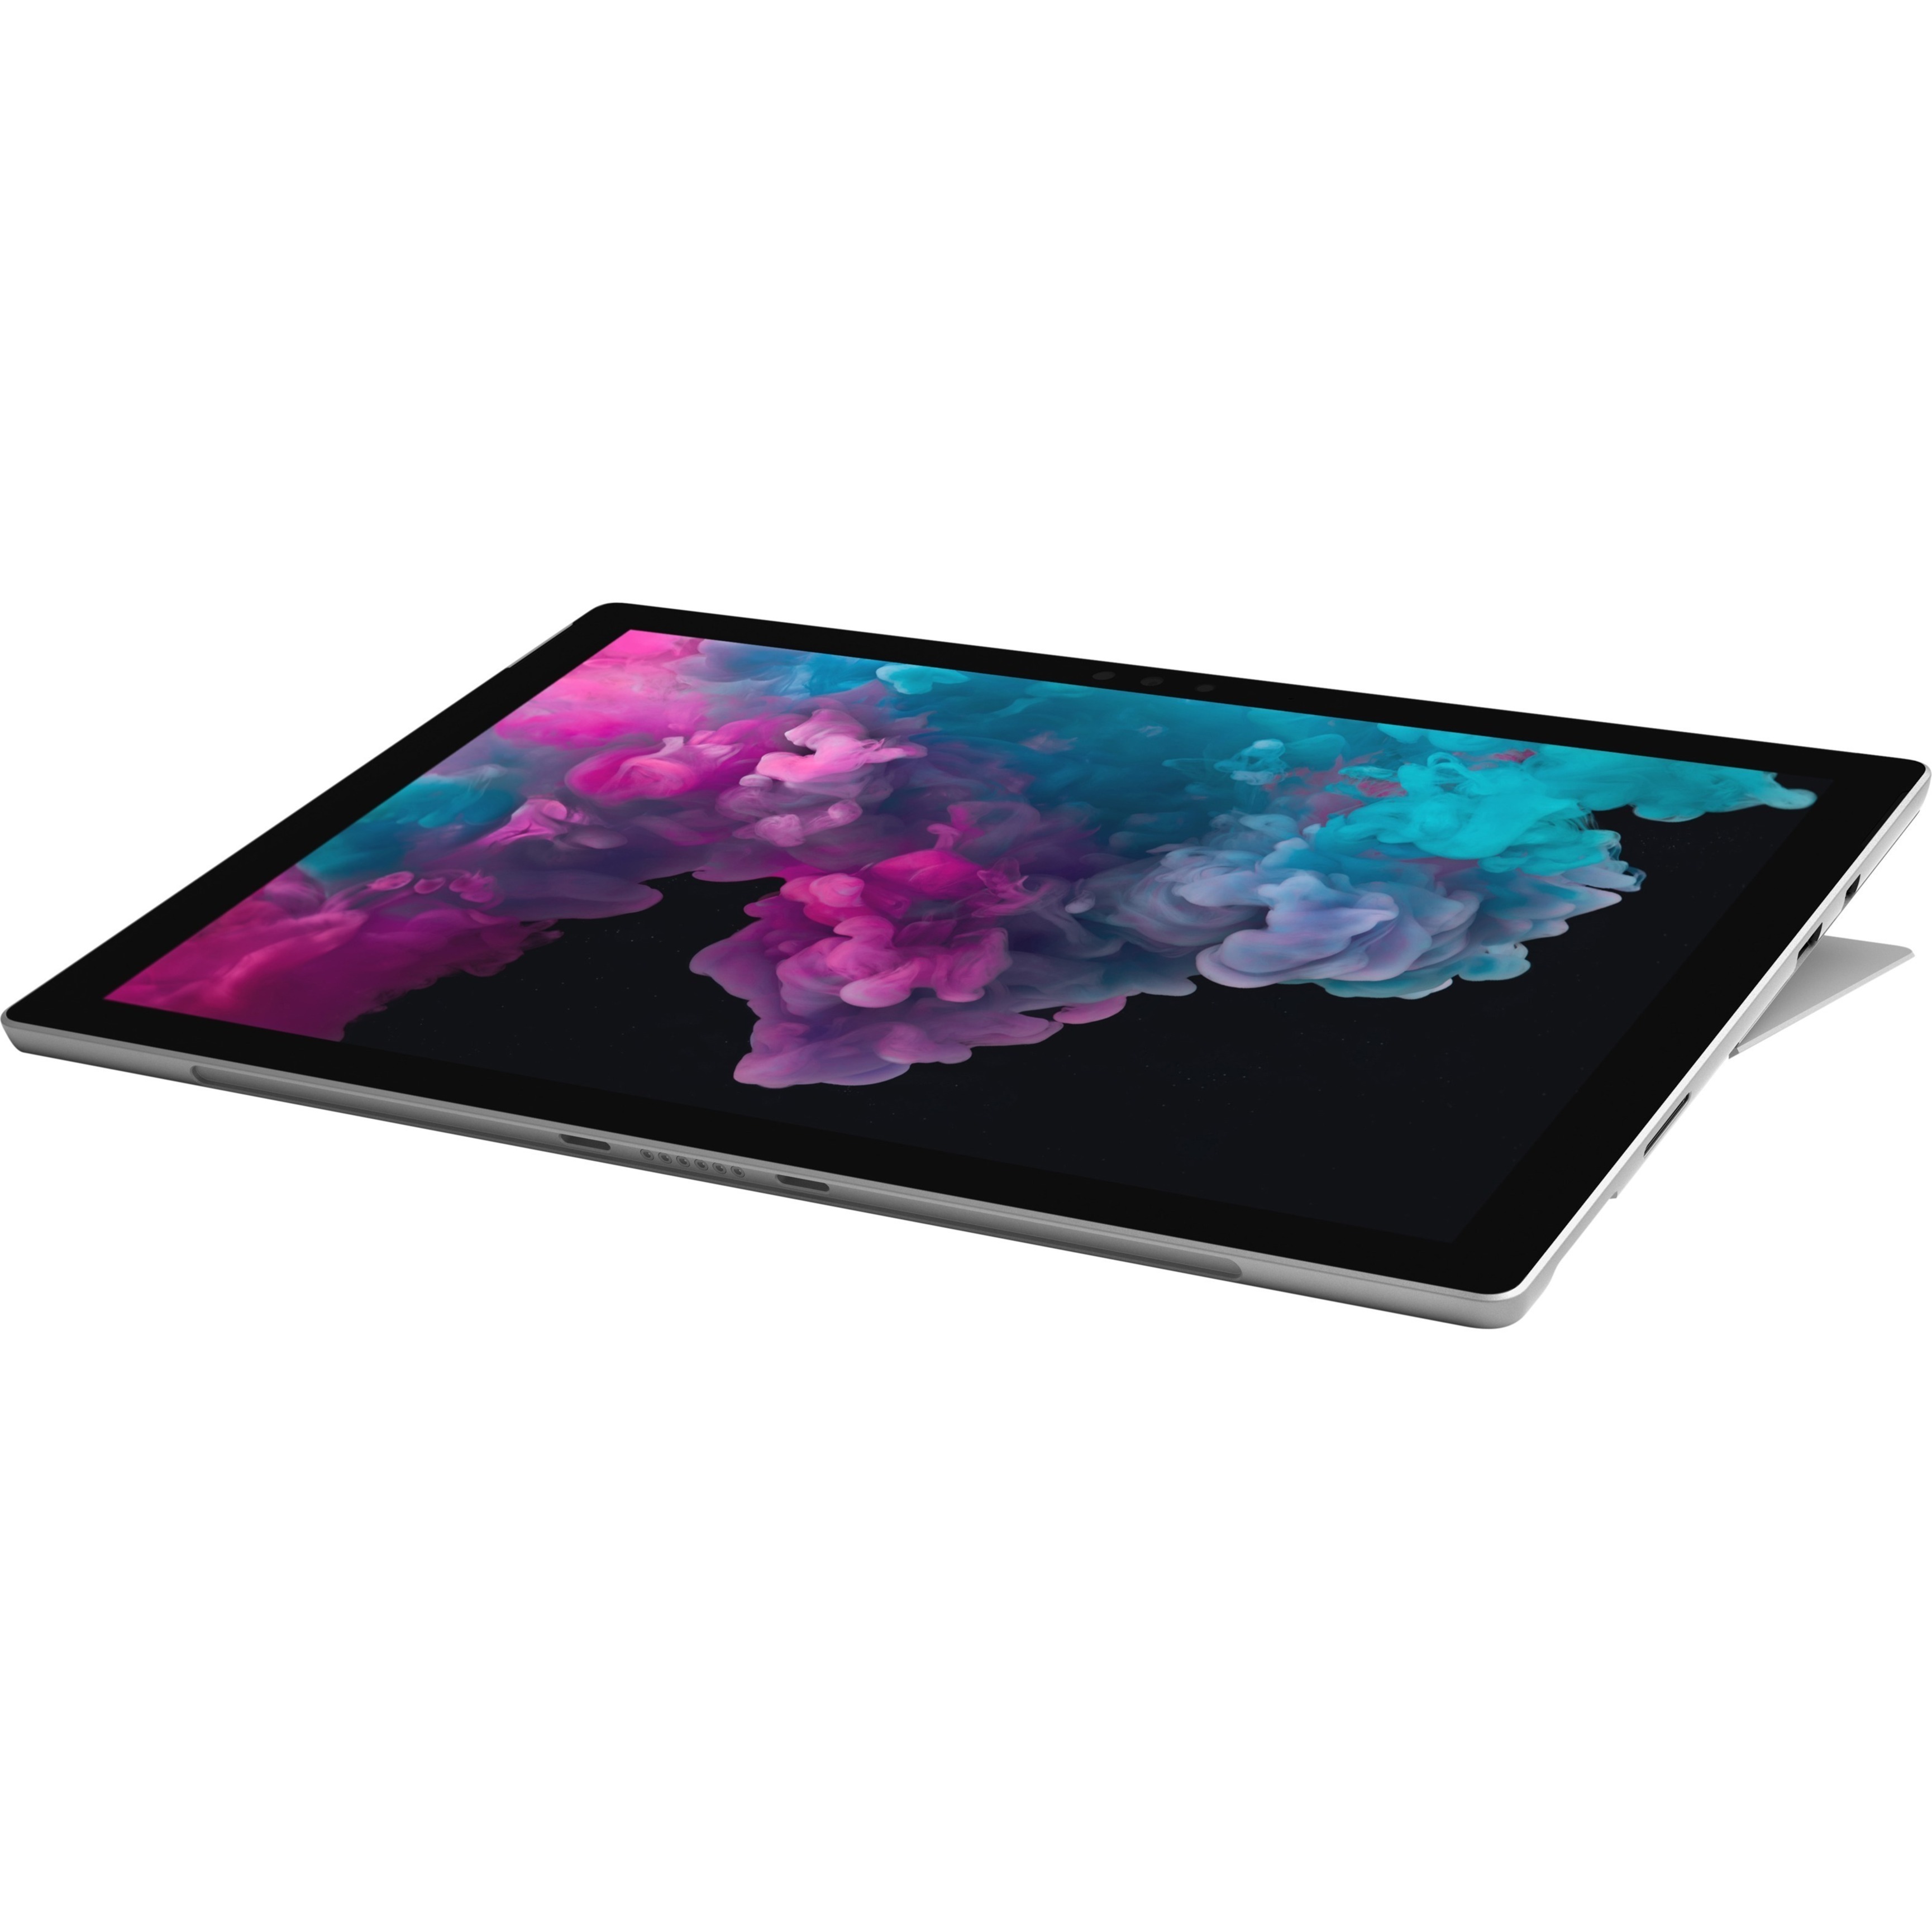 Microsoft Surface Pro 6 - Tablet - Core i5 8250U / 1.6 GHz - Windows 10 Home - 8 GB RAM - 128 GB SSD NVMe - 12.3" Touchscreen 2736 x 1824 - UHD Graphics 620 - Wi-Fi, Bluetooth - Platinum - image 1 of 40